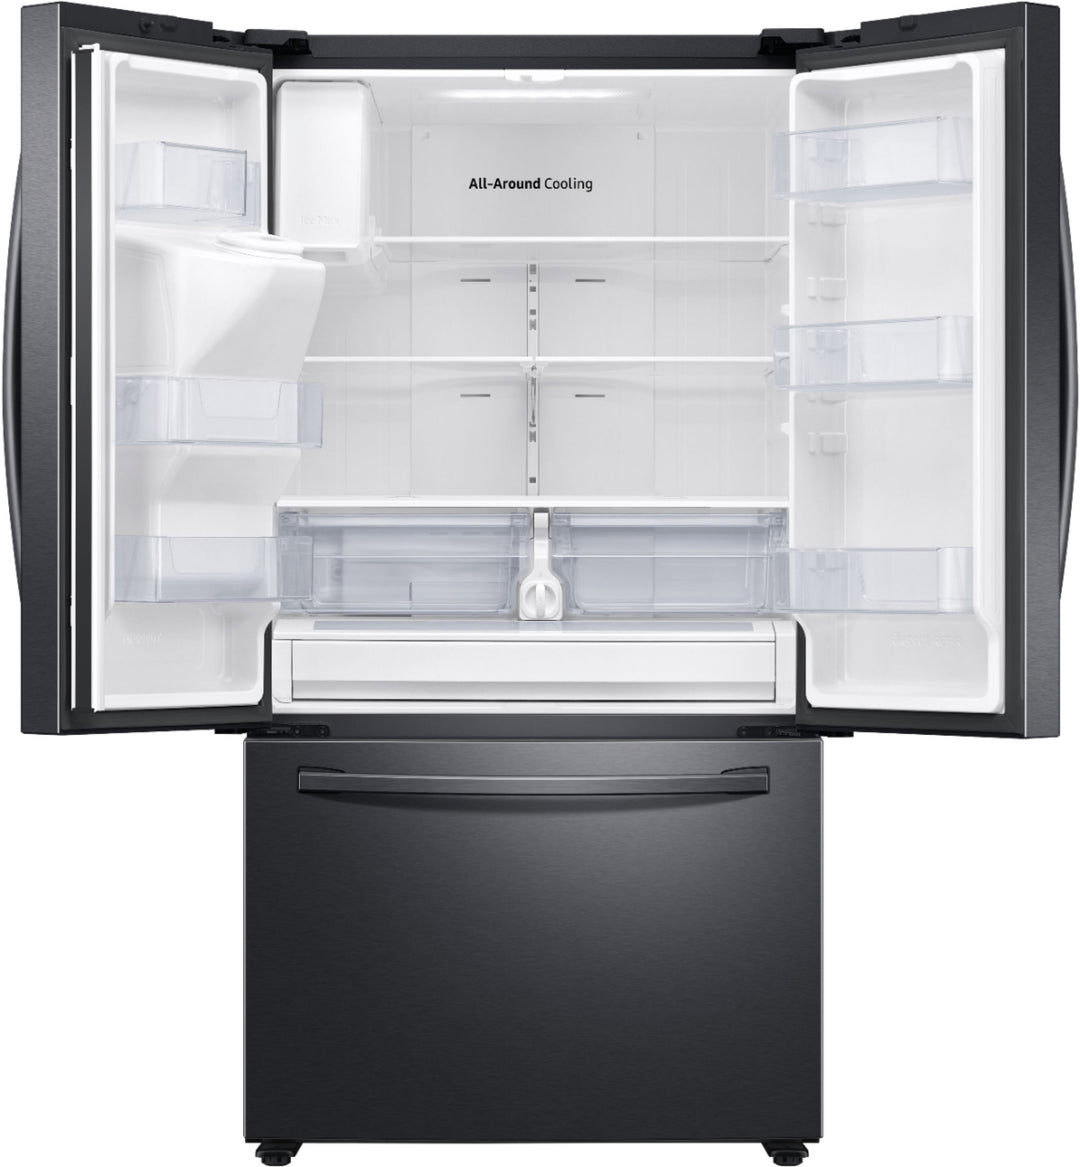 Samsung - 27 cu. ft. Large Capacity 3-Door French Door Refrigerator with External Water & Ice Dispenser - Black stainless steel_10